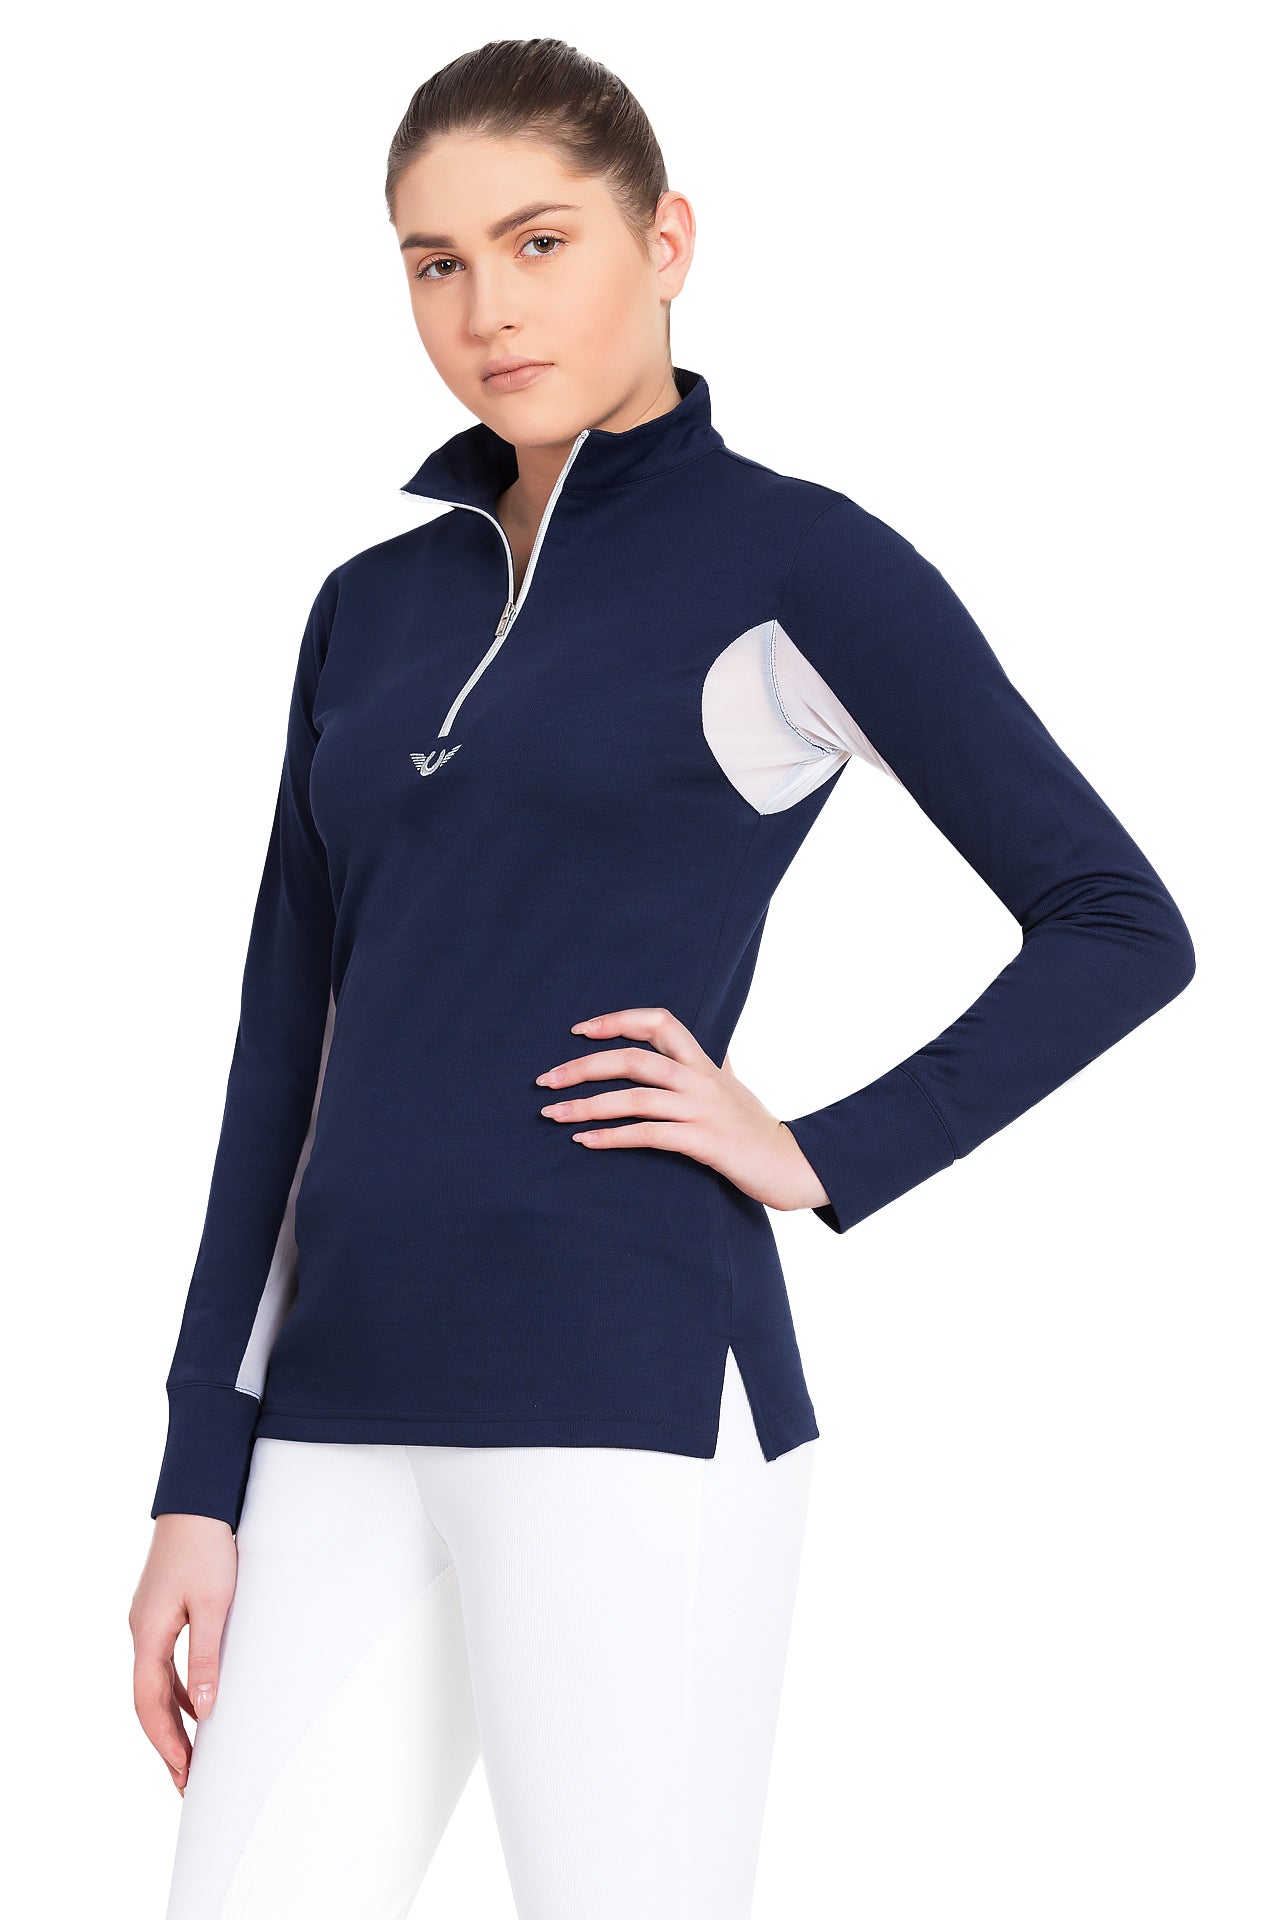 TuffRider Ladies Ventilated Technical Long Sleeve Sport Shirt - Breeches.com